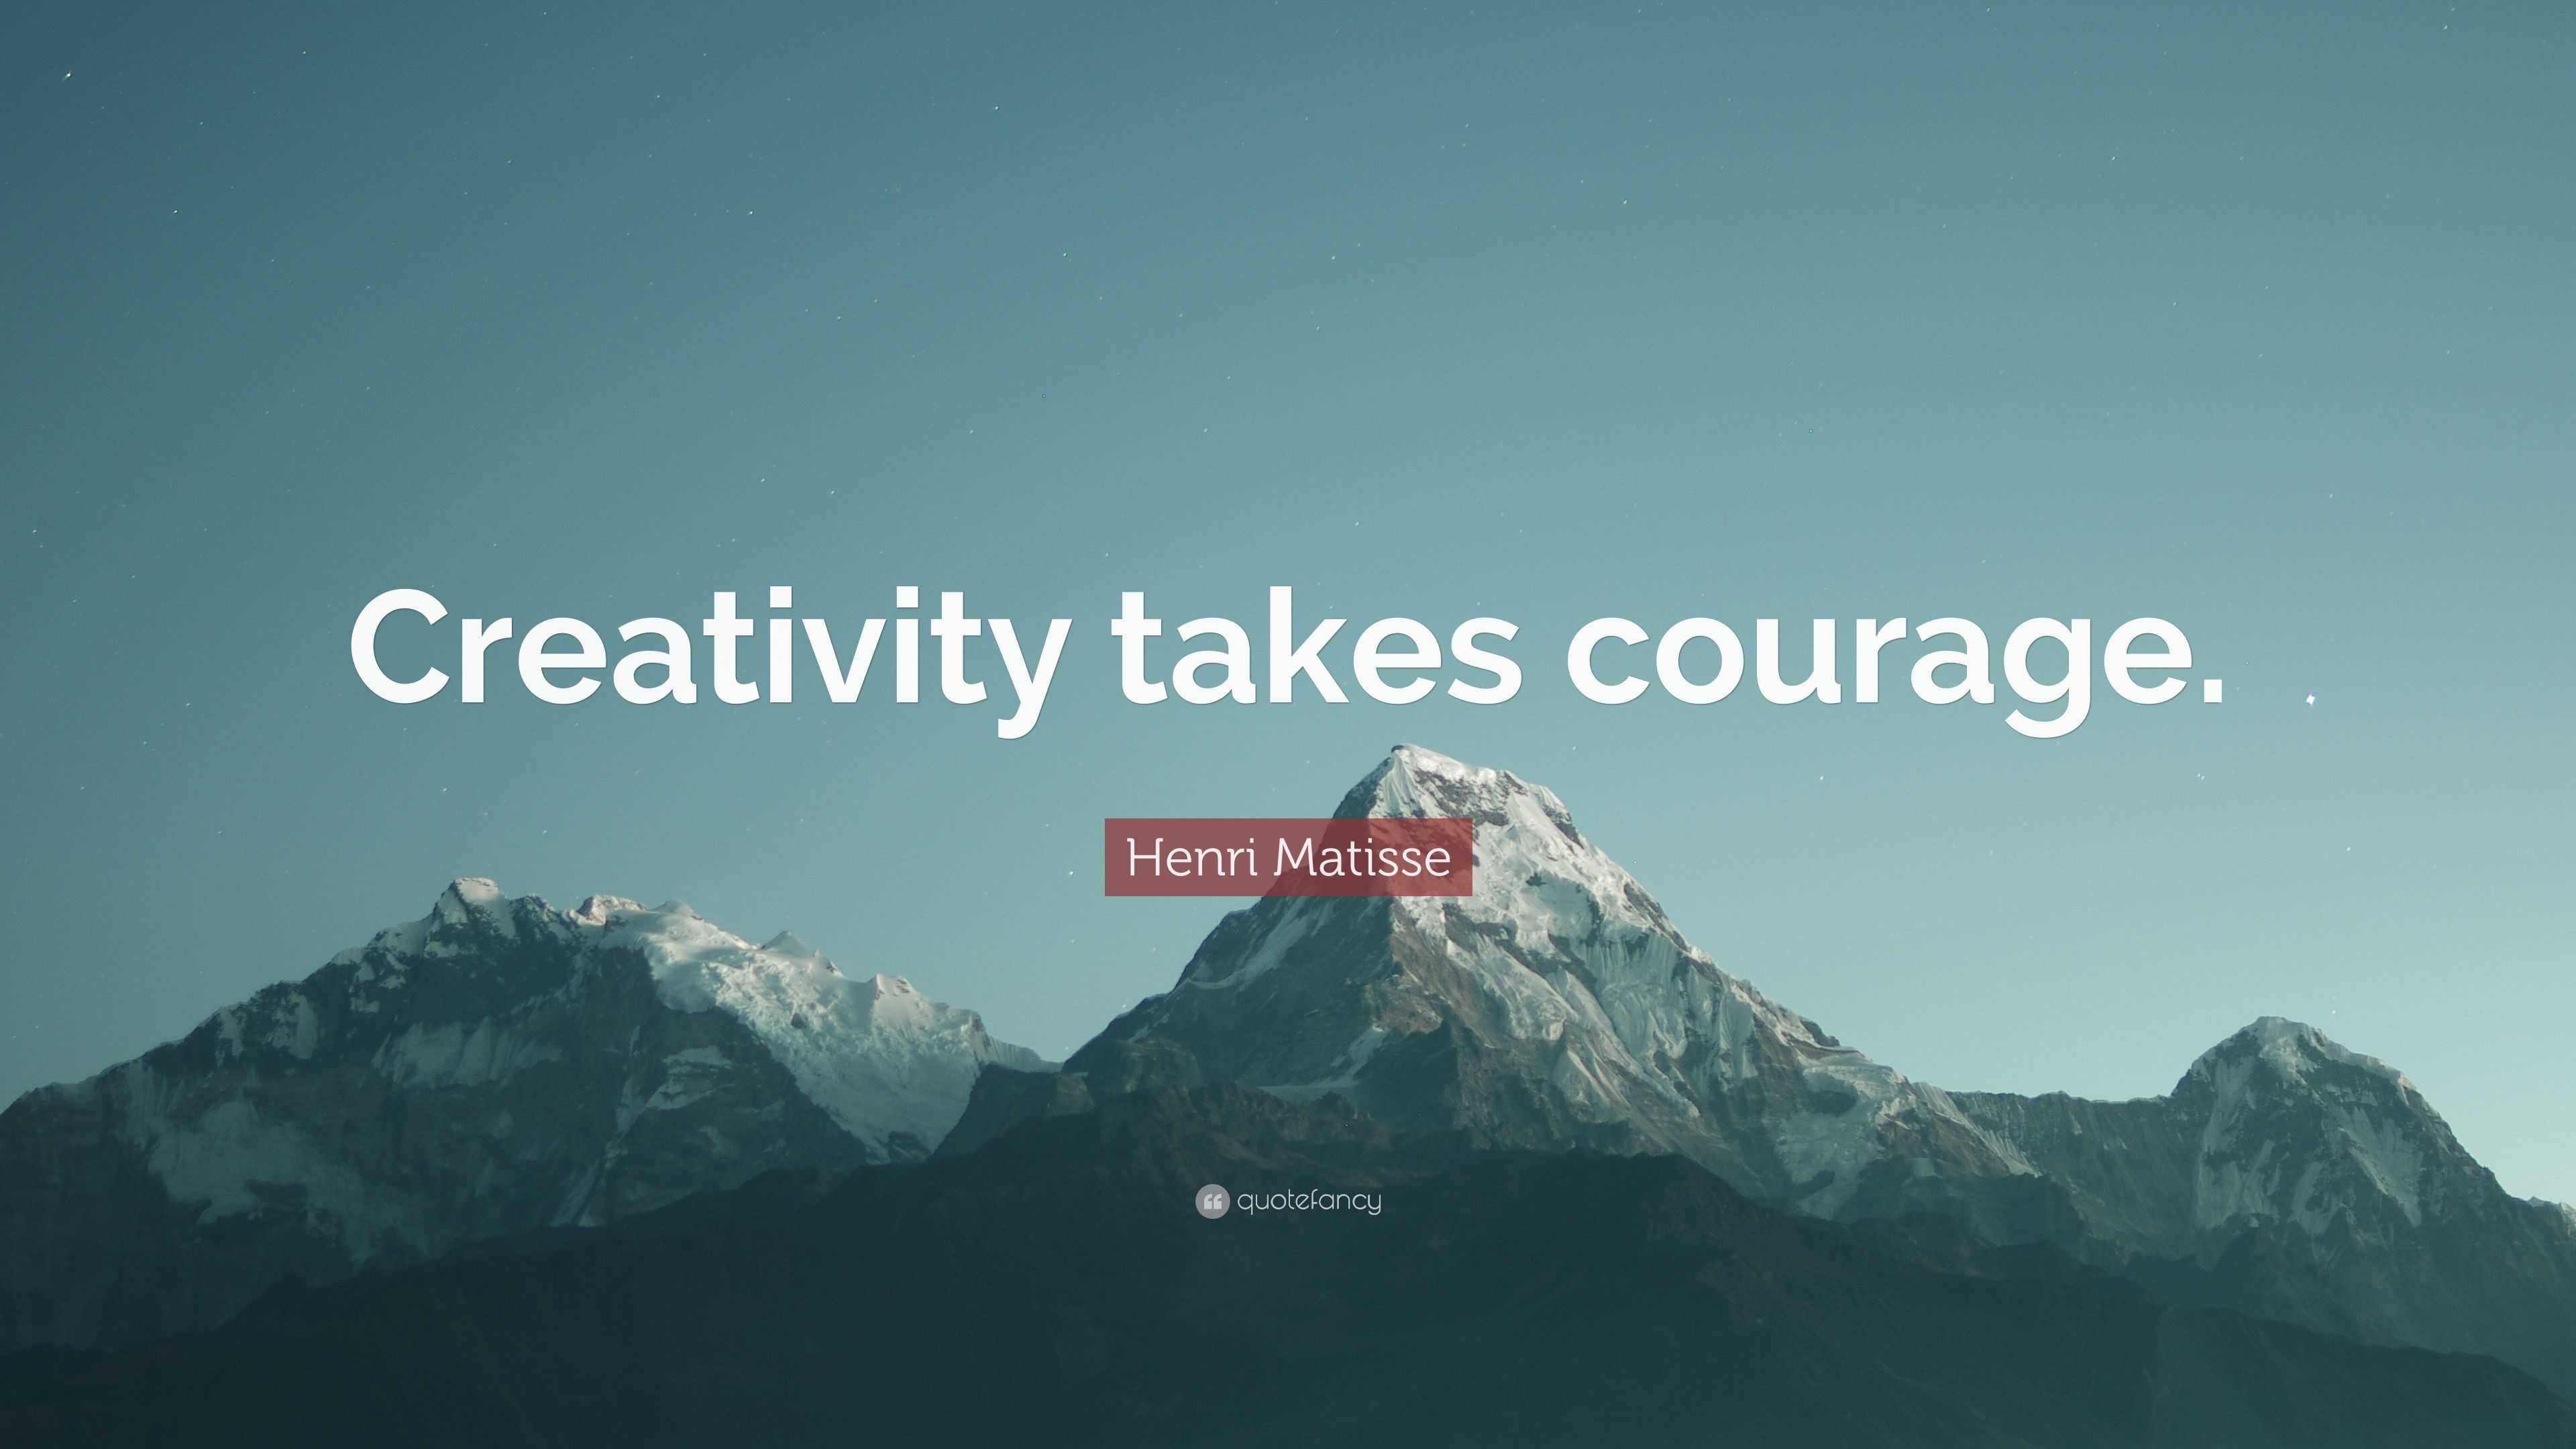 Henri Matisse Quote “creativity Takes Courage